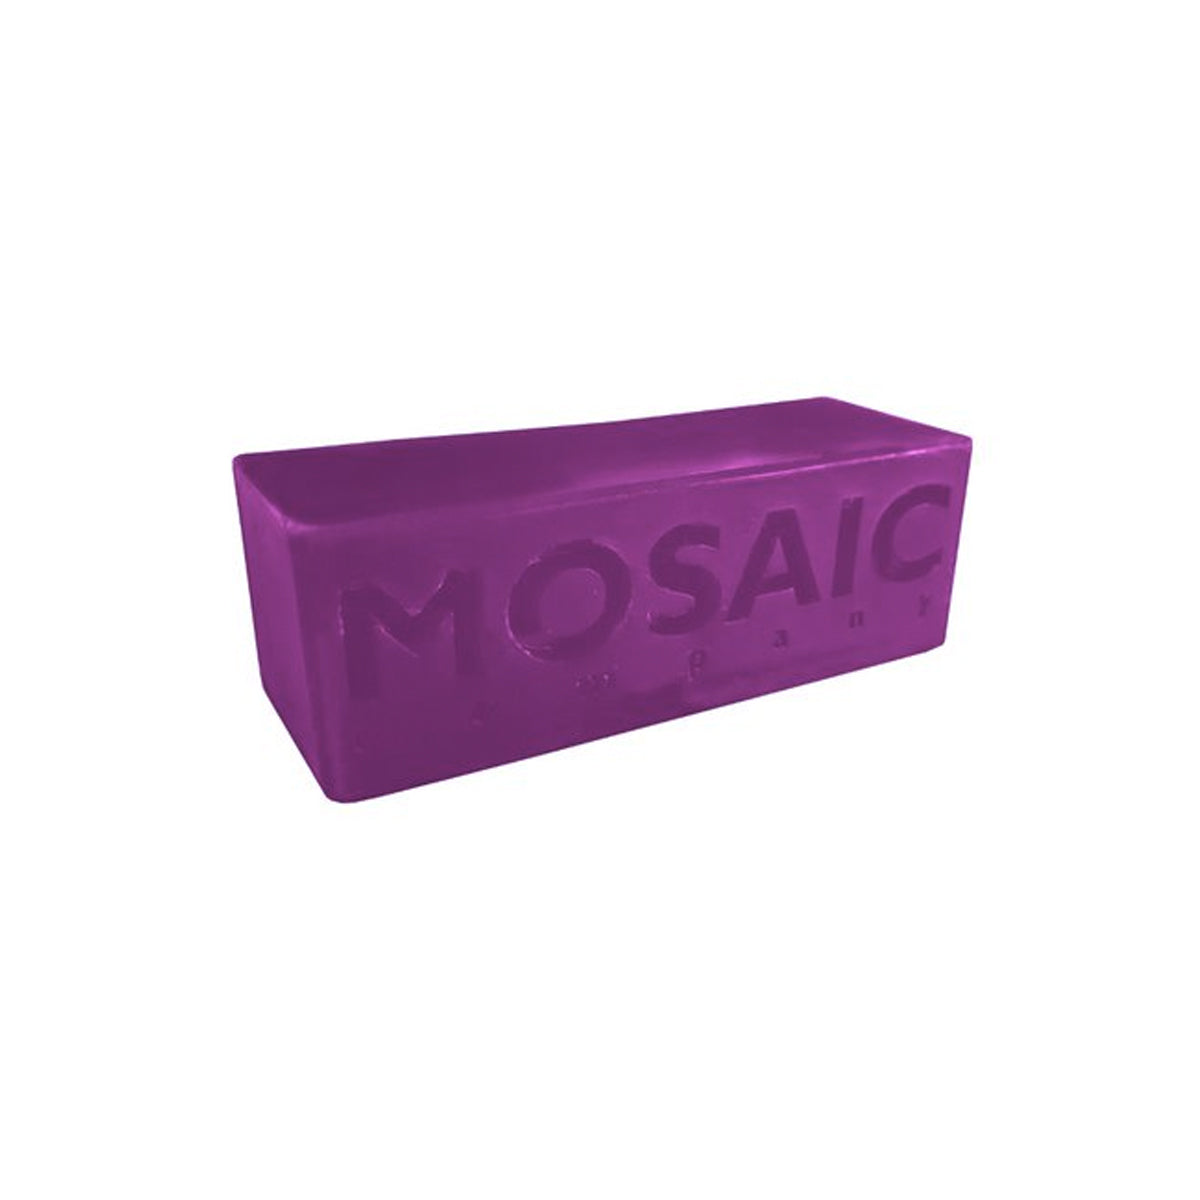 Mosaic Sk8 Wax Purple